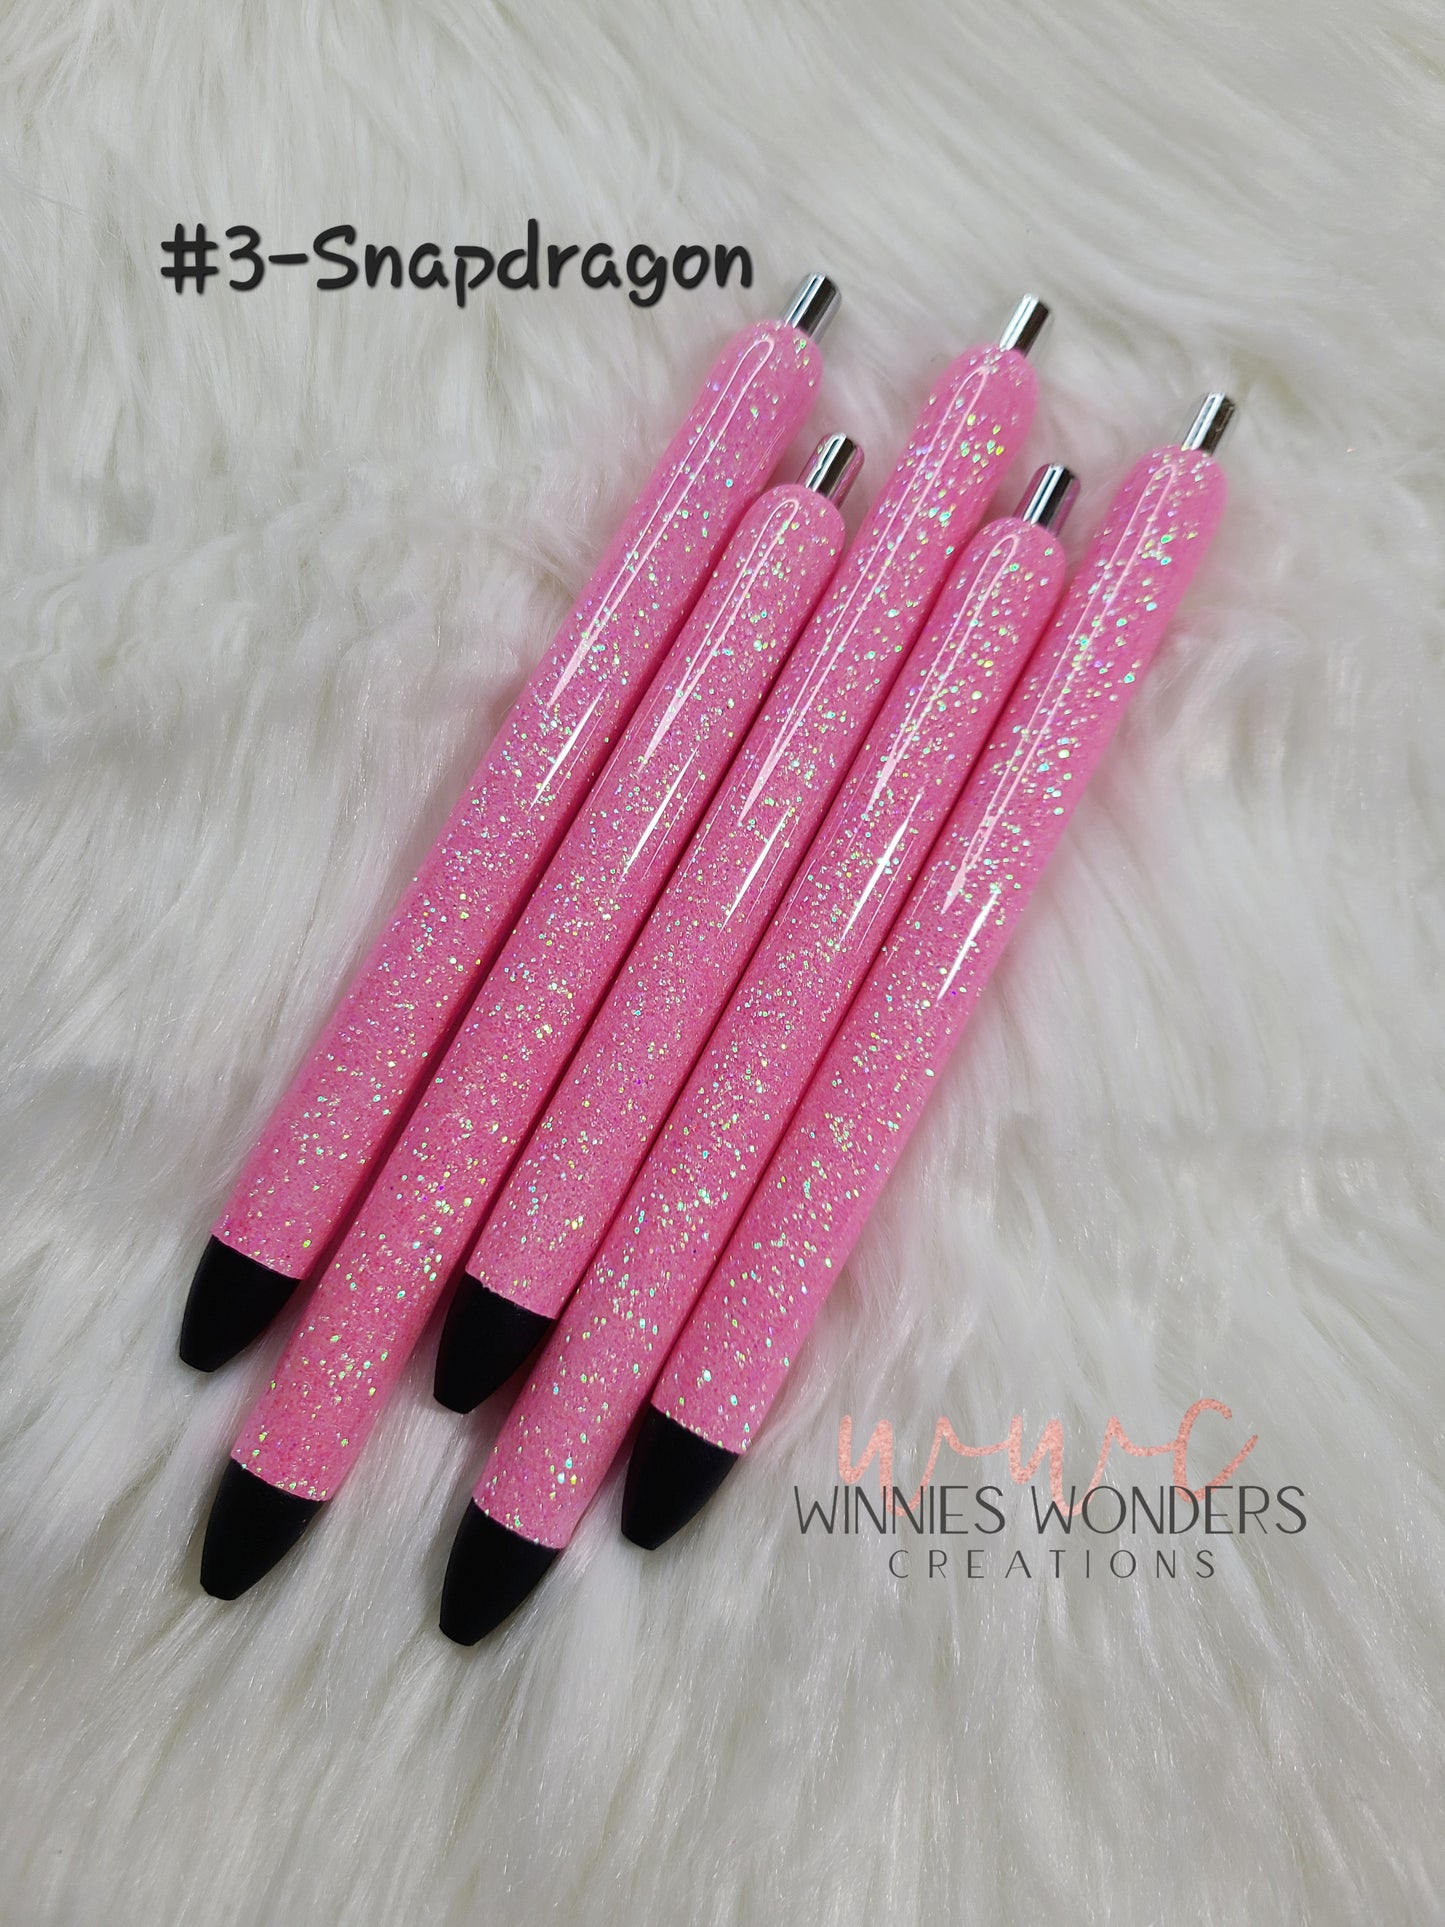 Pink Glitter Weeding Pen for Vinyl, HTV or Paper, Epoxy Pin Pen